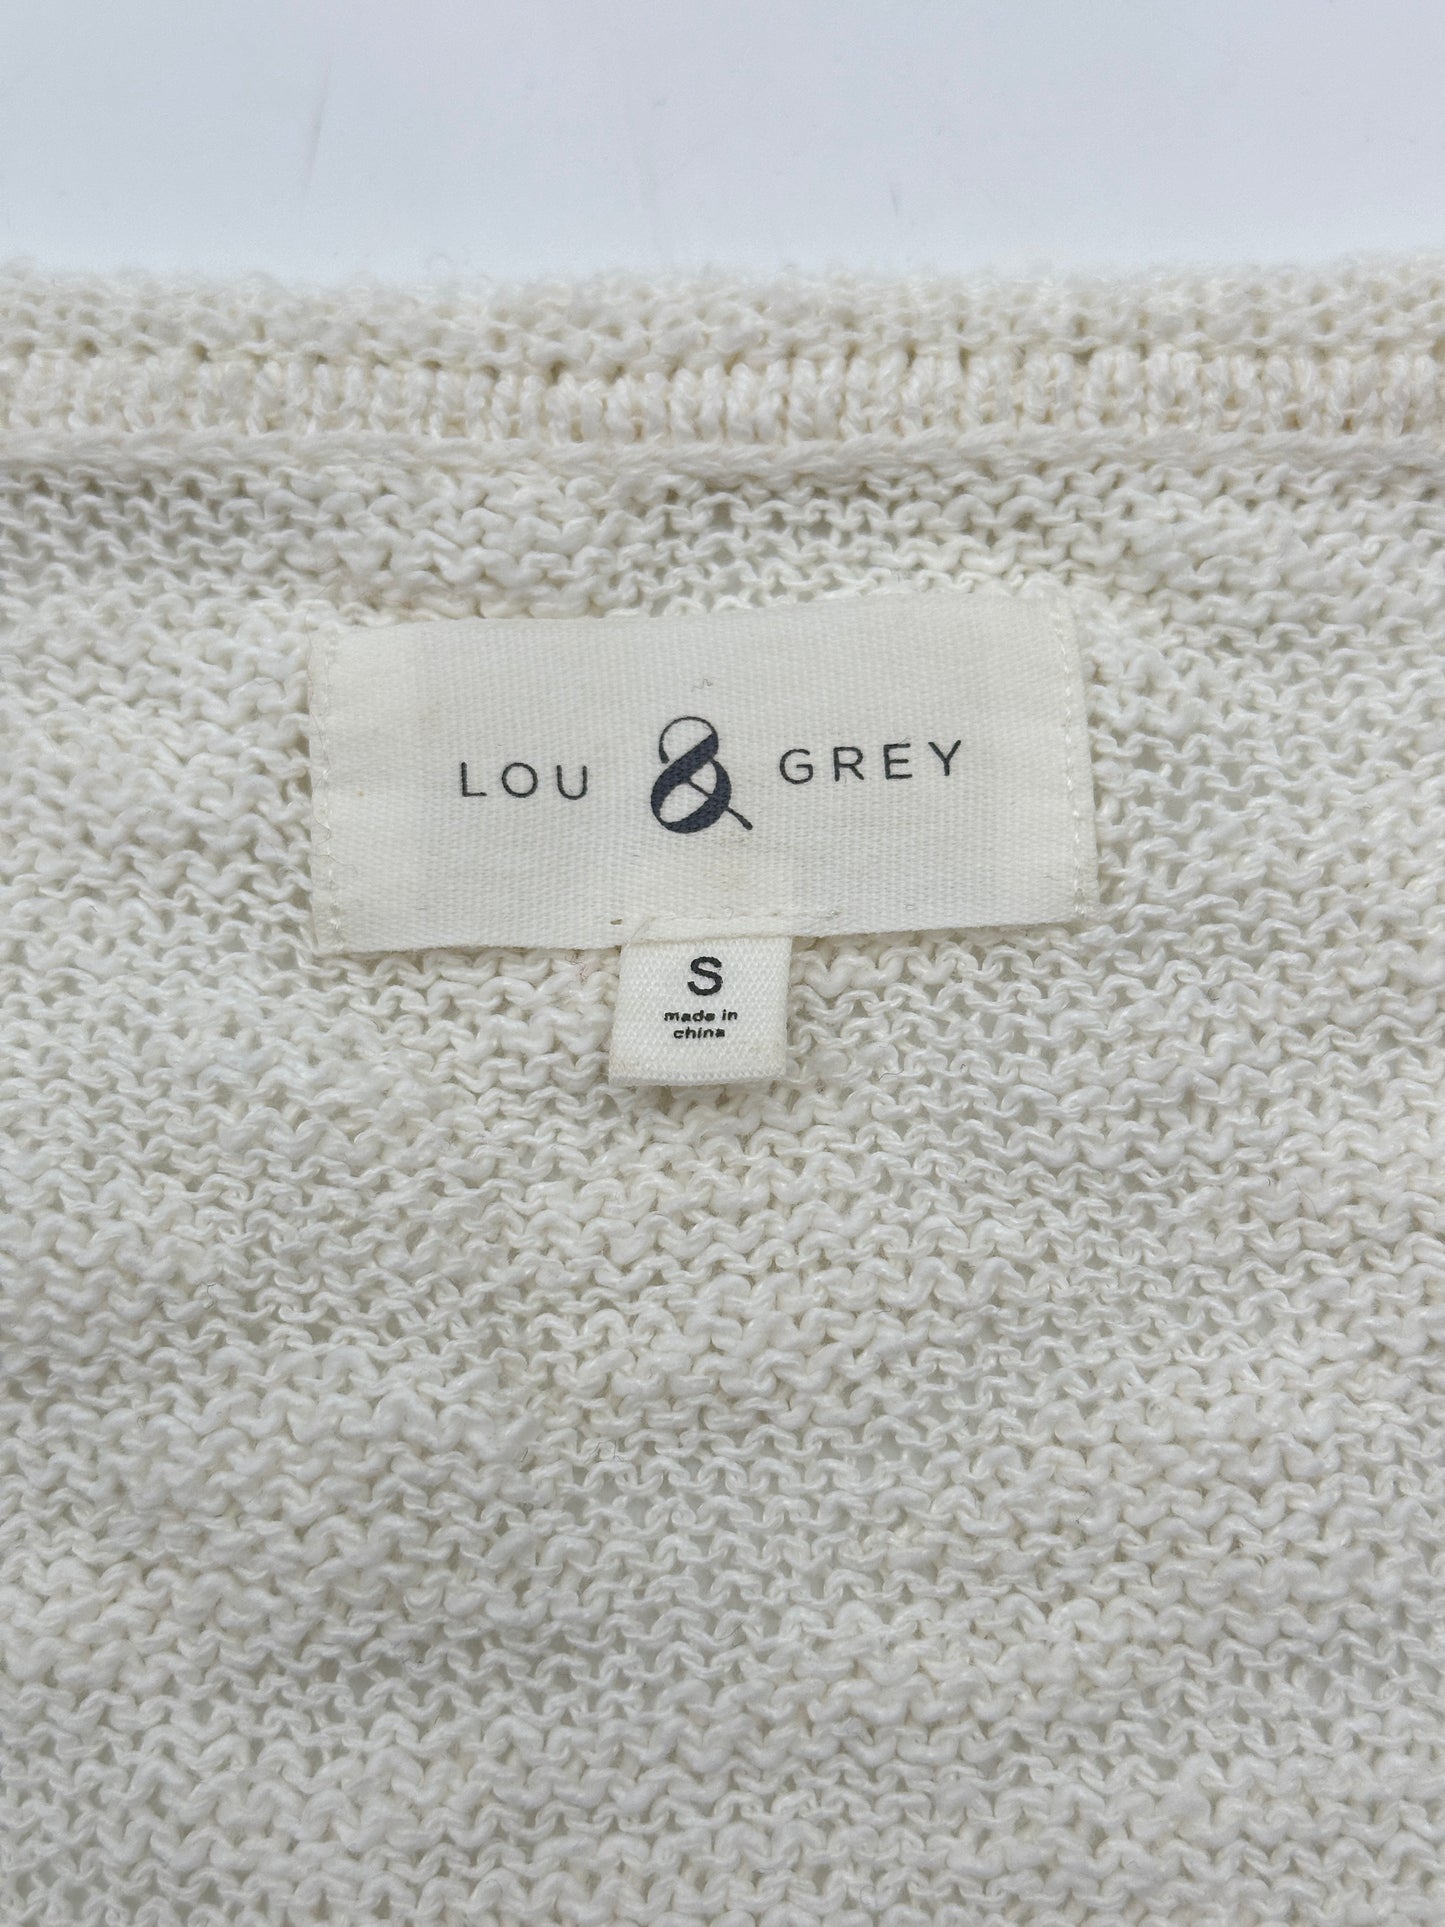 Lou & Grey Size S Cream w/Multi-Colored Stars V-Neck Oversized Sweater